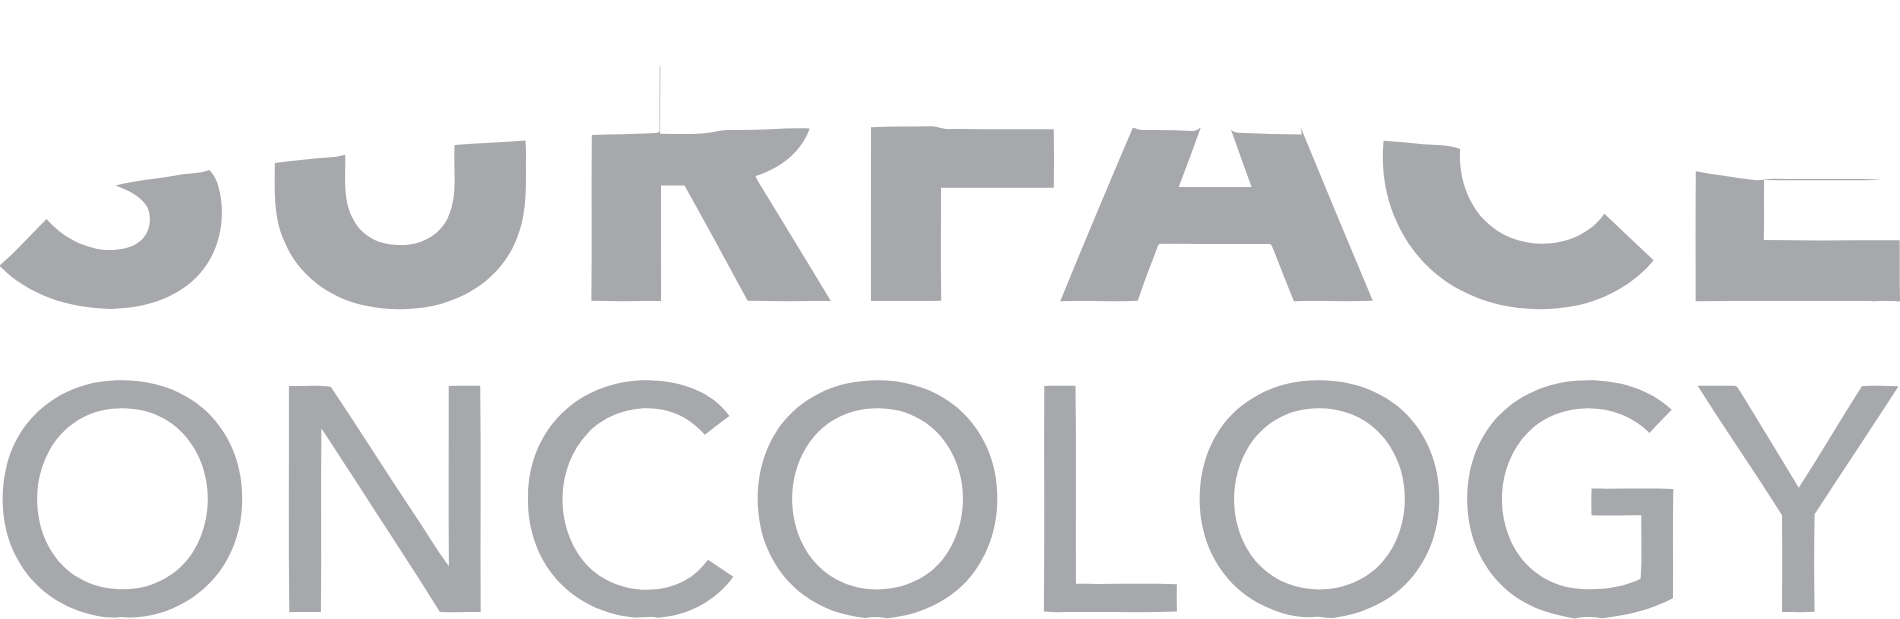 Surface Oncology logo large for dark backgrounds (transparent PNG)